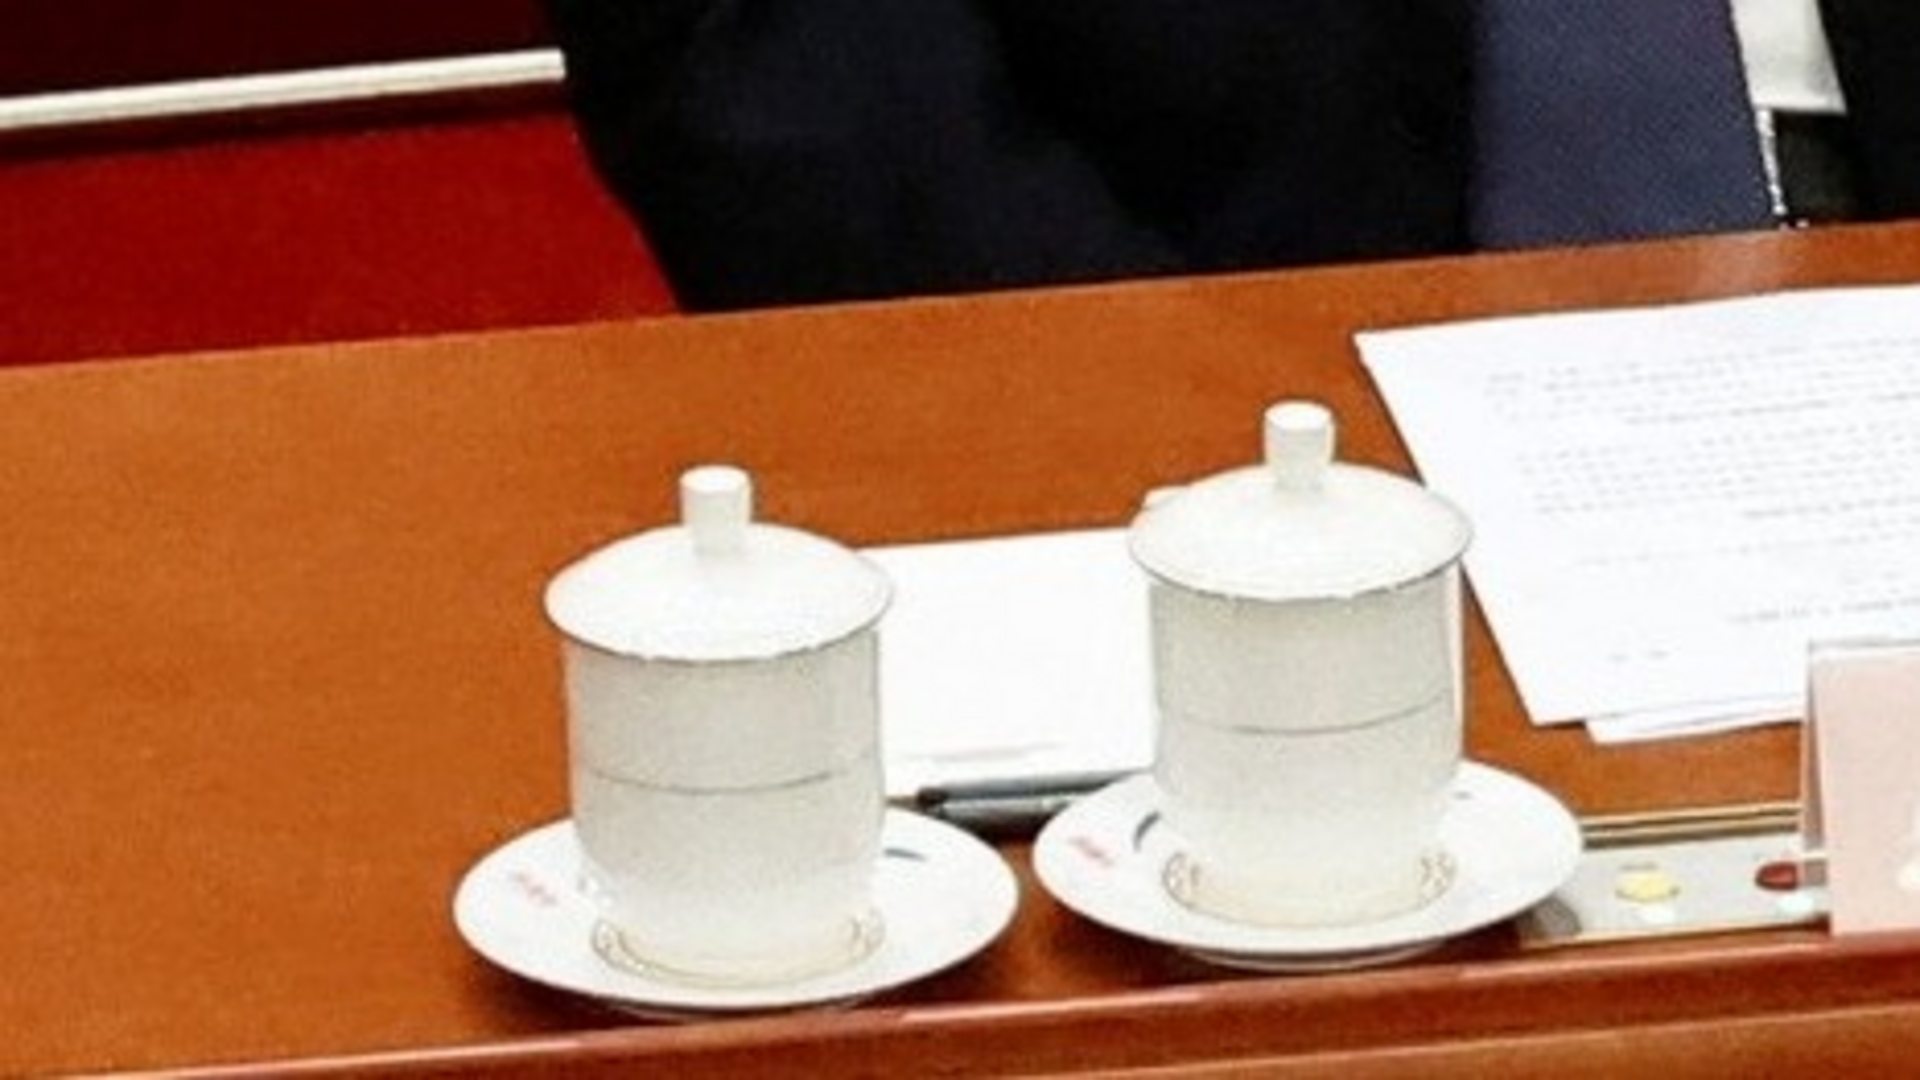 Presidential Pets Children's Mug & Plate